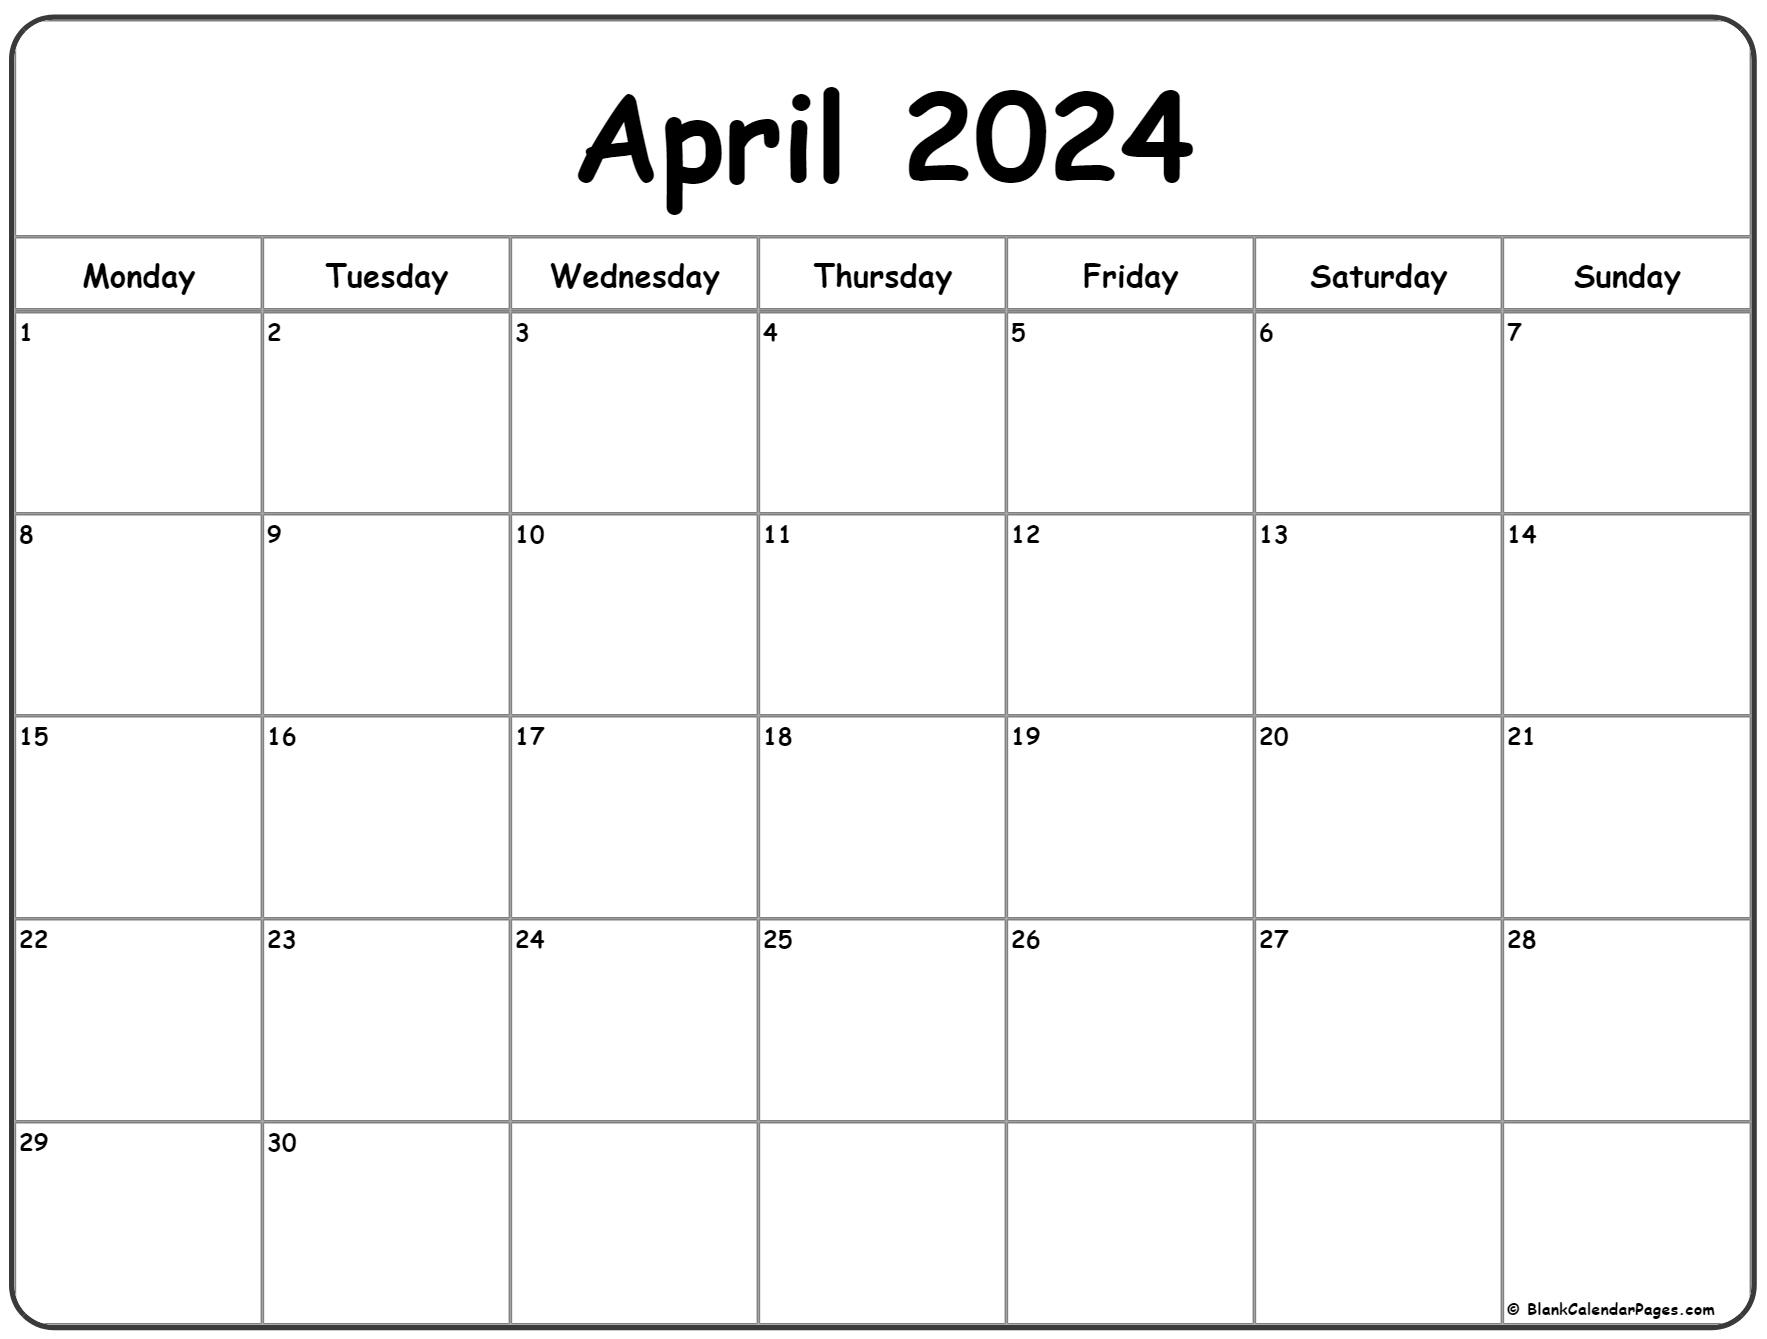 April 2024 Monday Calendar | Monday To Sunday for Printable Weekly Calendar April 2024